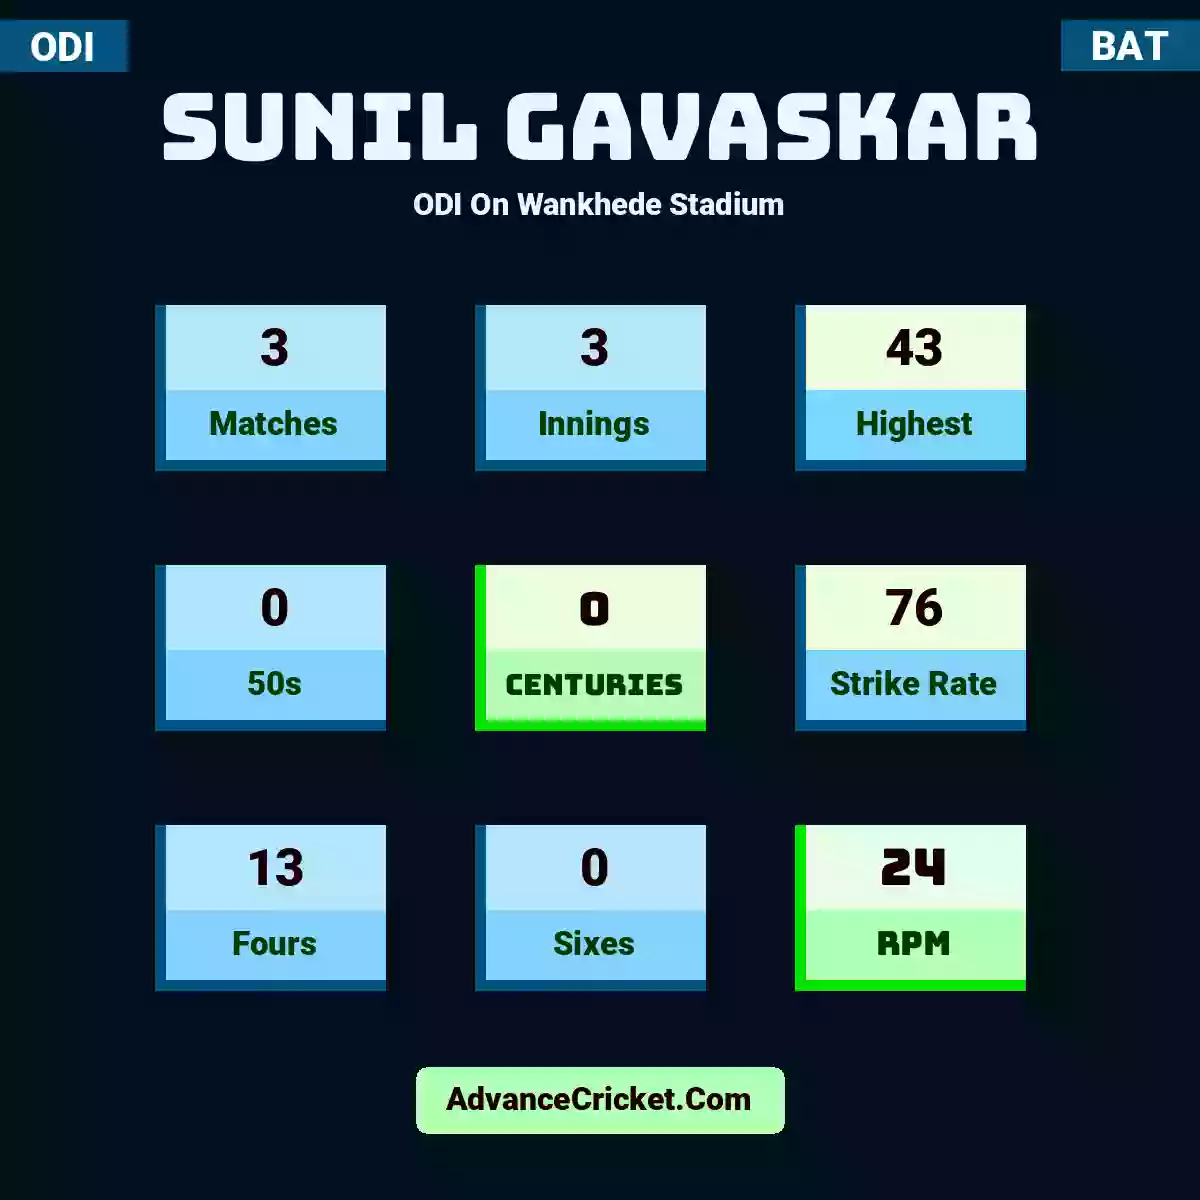 Sunil Gavaskar ODI  On Wankhede Stadium, Sunil Gavaskar played 3 matches, scored 43 runs as highest, 0 half-centuries, and 0 centuries, with a strike rate of 76. S.Gavaskar hit 13 fours and 0 sixes, with an RPM of 24.